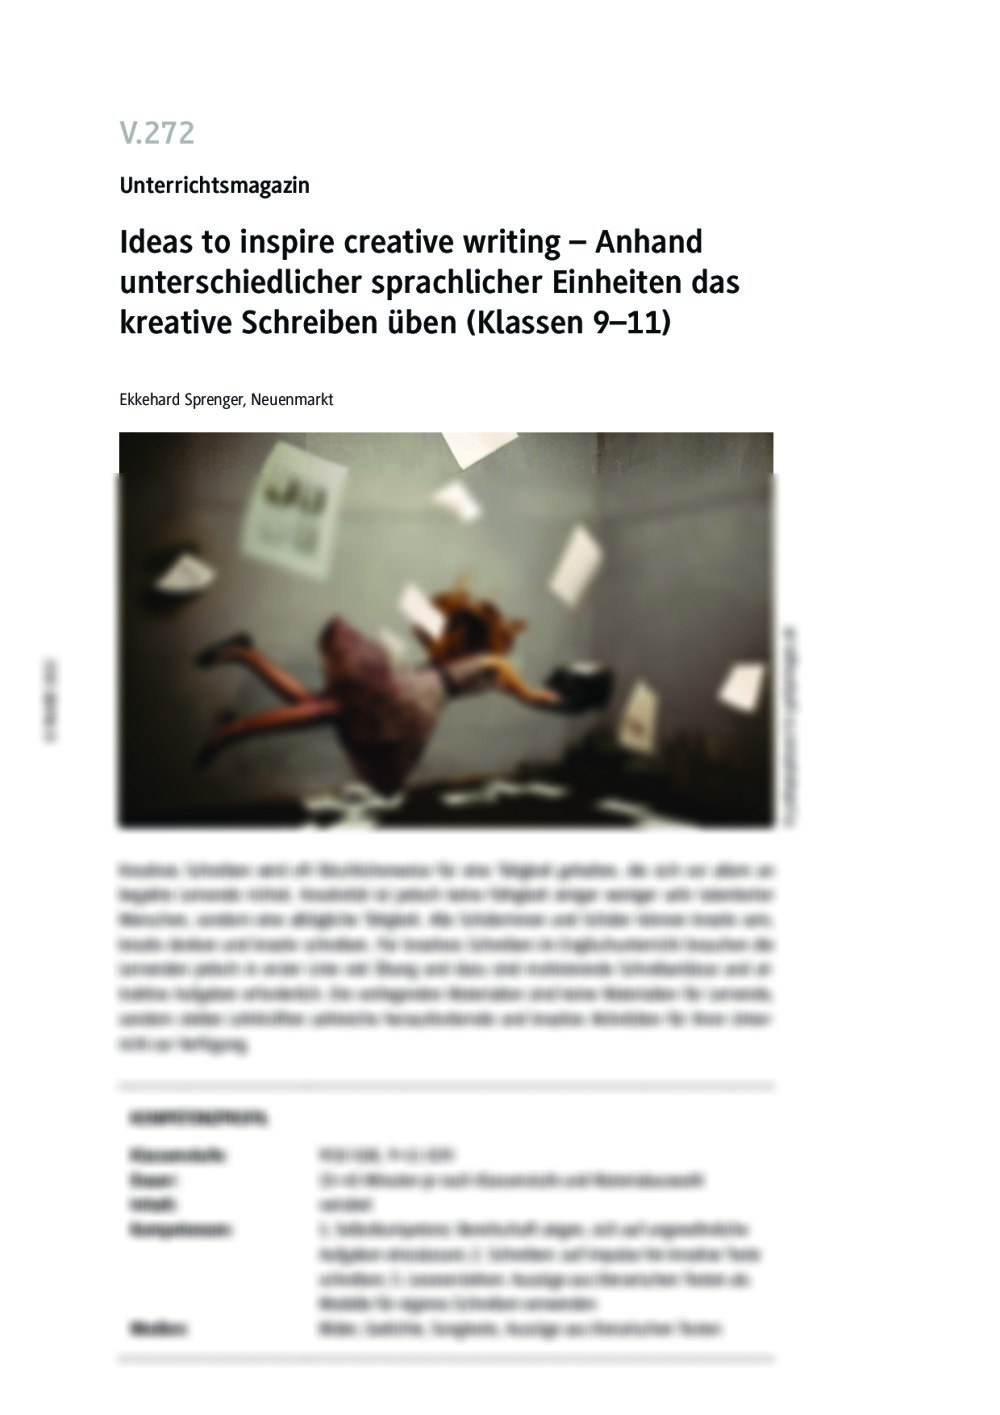 Ideas to inspire creative writing - Seite 1